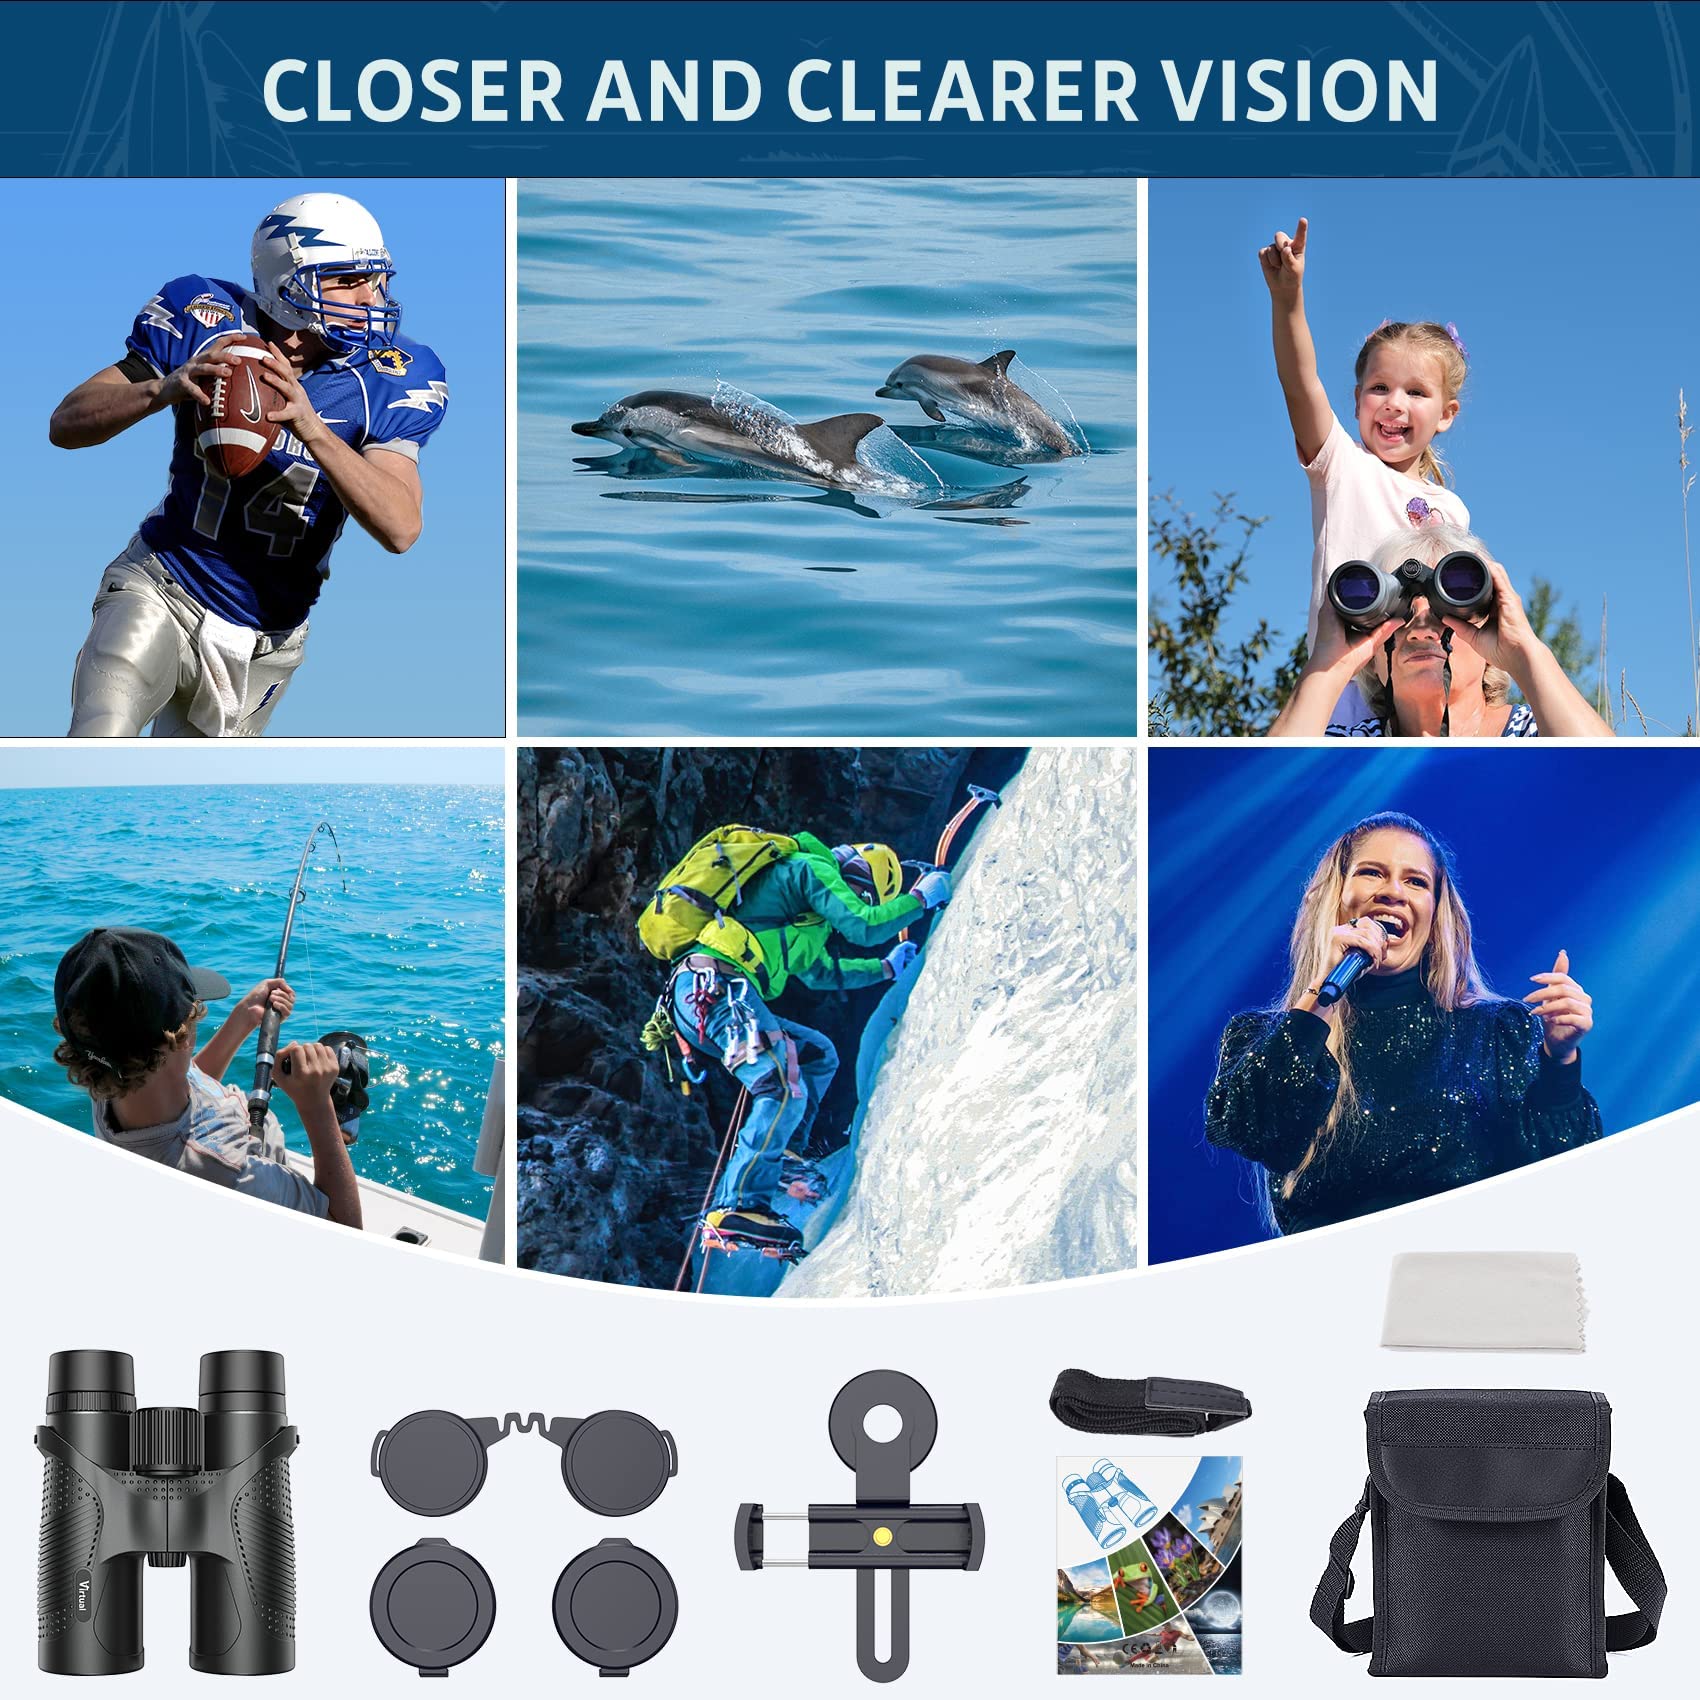 12X42 HD Binoculars for Adults, Virtual High Power Binoculars with BaK4 Prisms FMC Lens, IPX7 Waterproof Binoculars with Phone Adapter Binoculars for Bird Watching, Hunting, Hiking, Travel, Concert